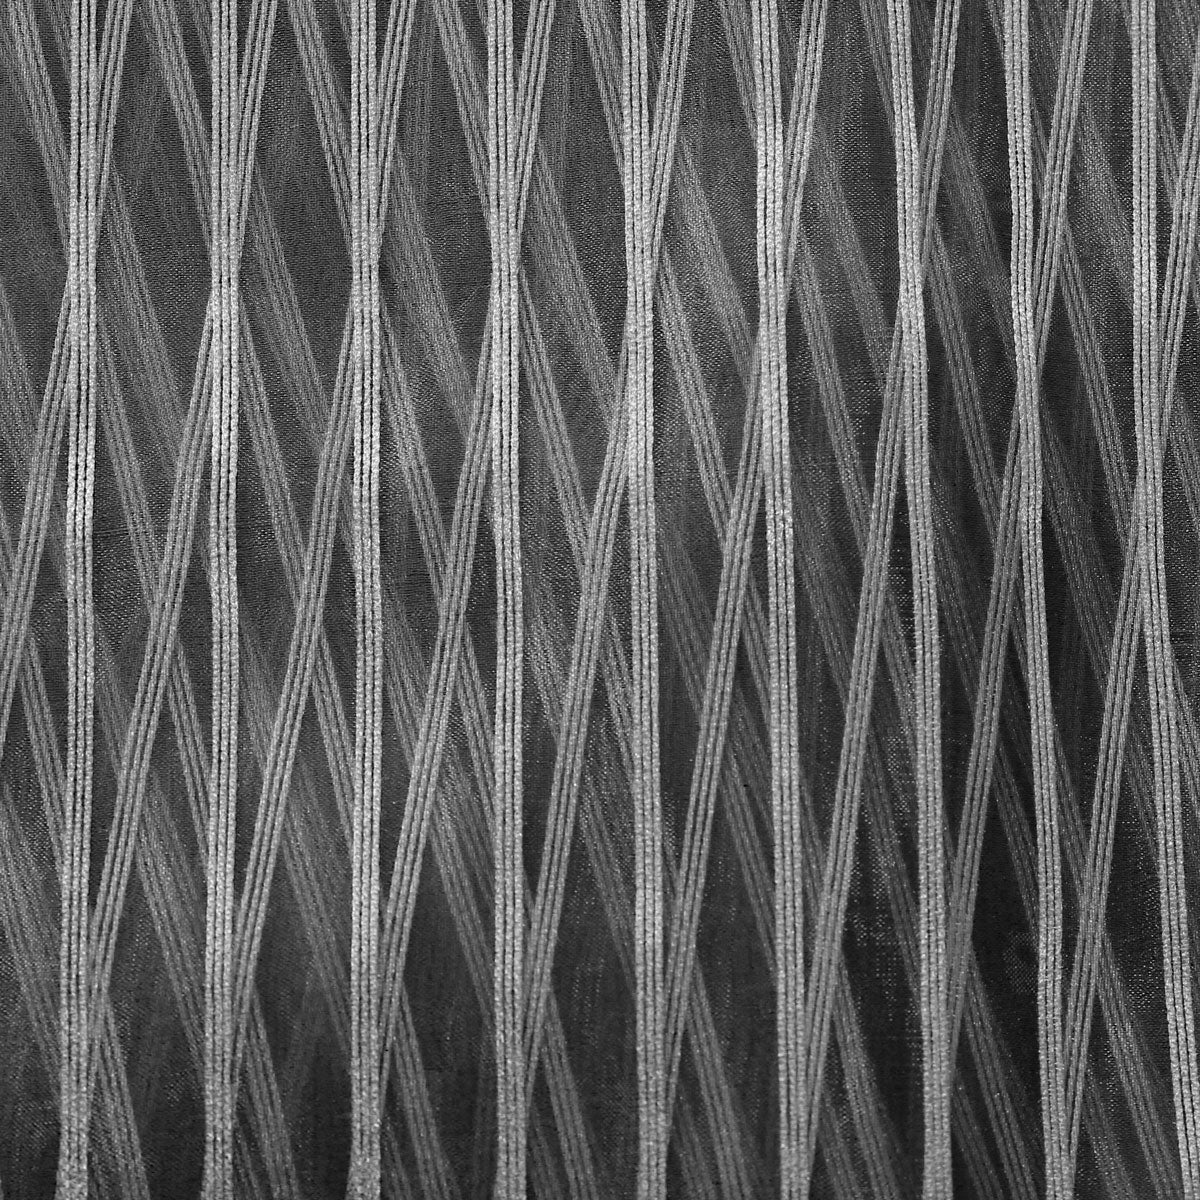 Gray Striped Able Sheer Drapery Home Decor Fabric - Fashion Fabrics Los Angeles 